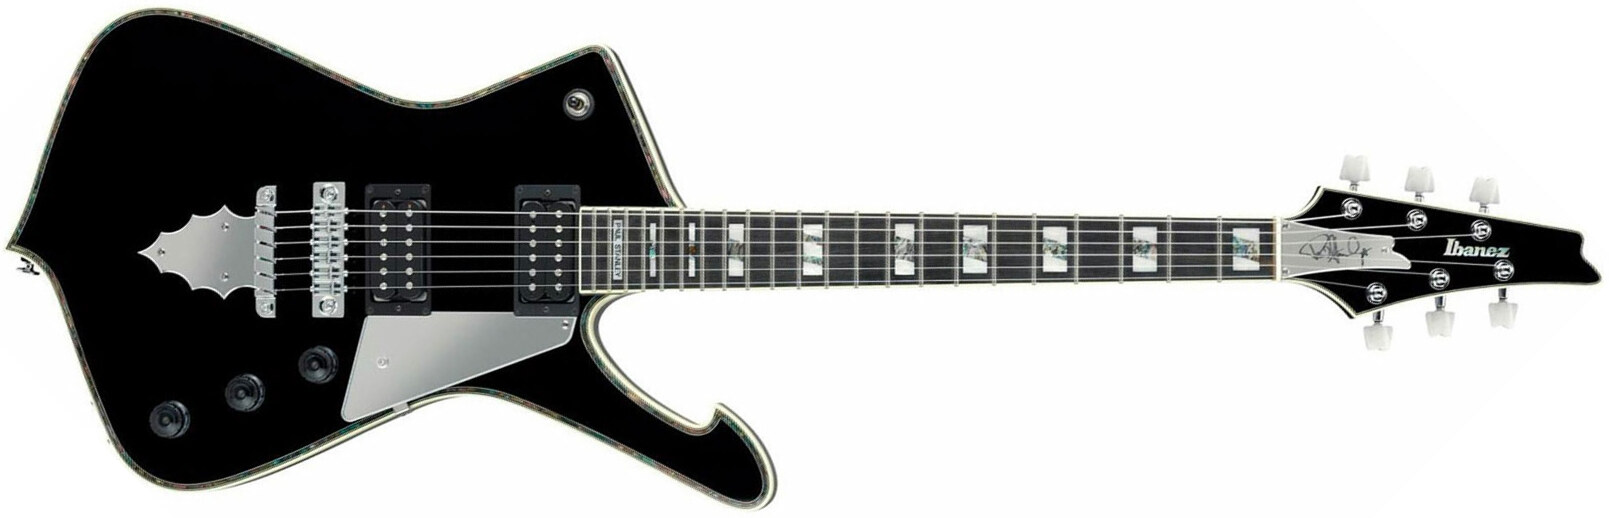 Ibanez Paul Stanley Ps10 Bk Japon Signature Hh Seymour Duncan Ht Eb - Black - Guitarra electrica metalica - Main picture